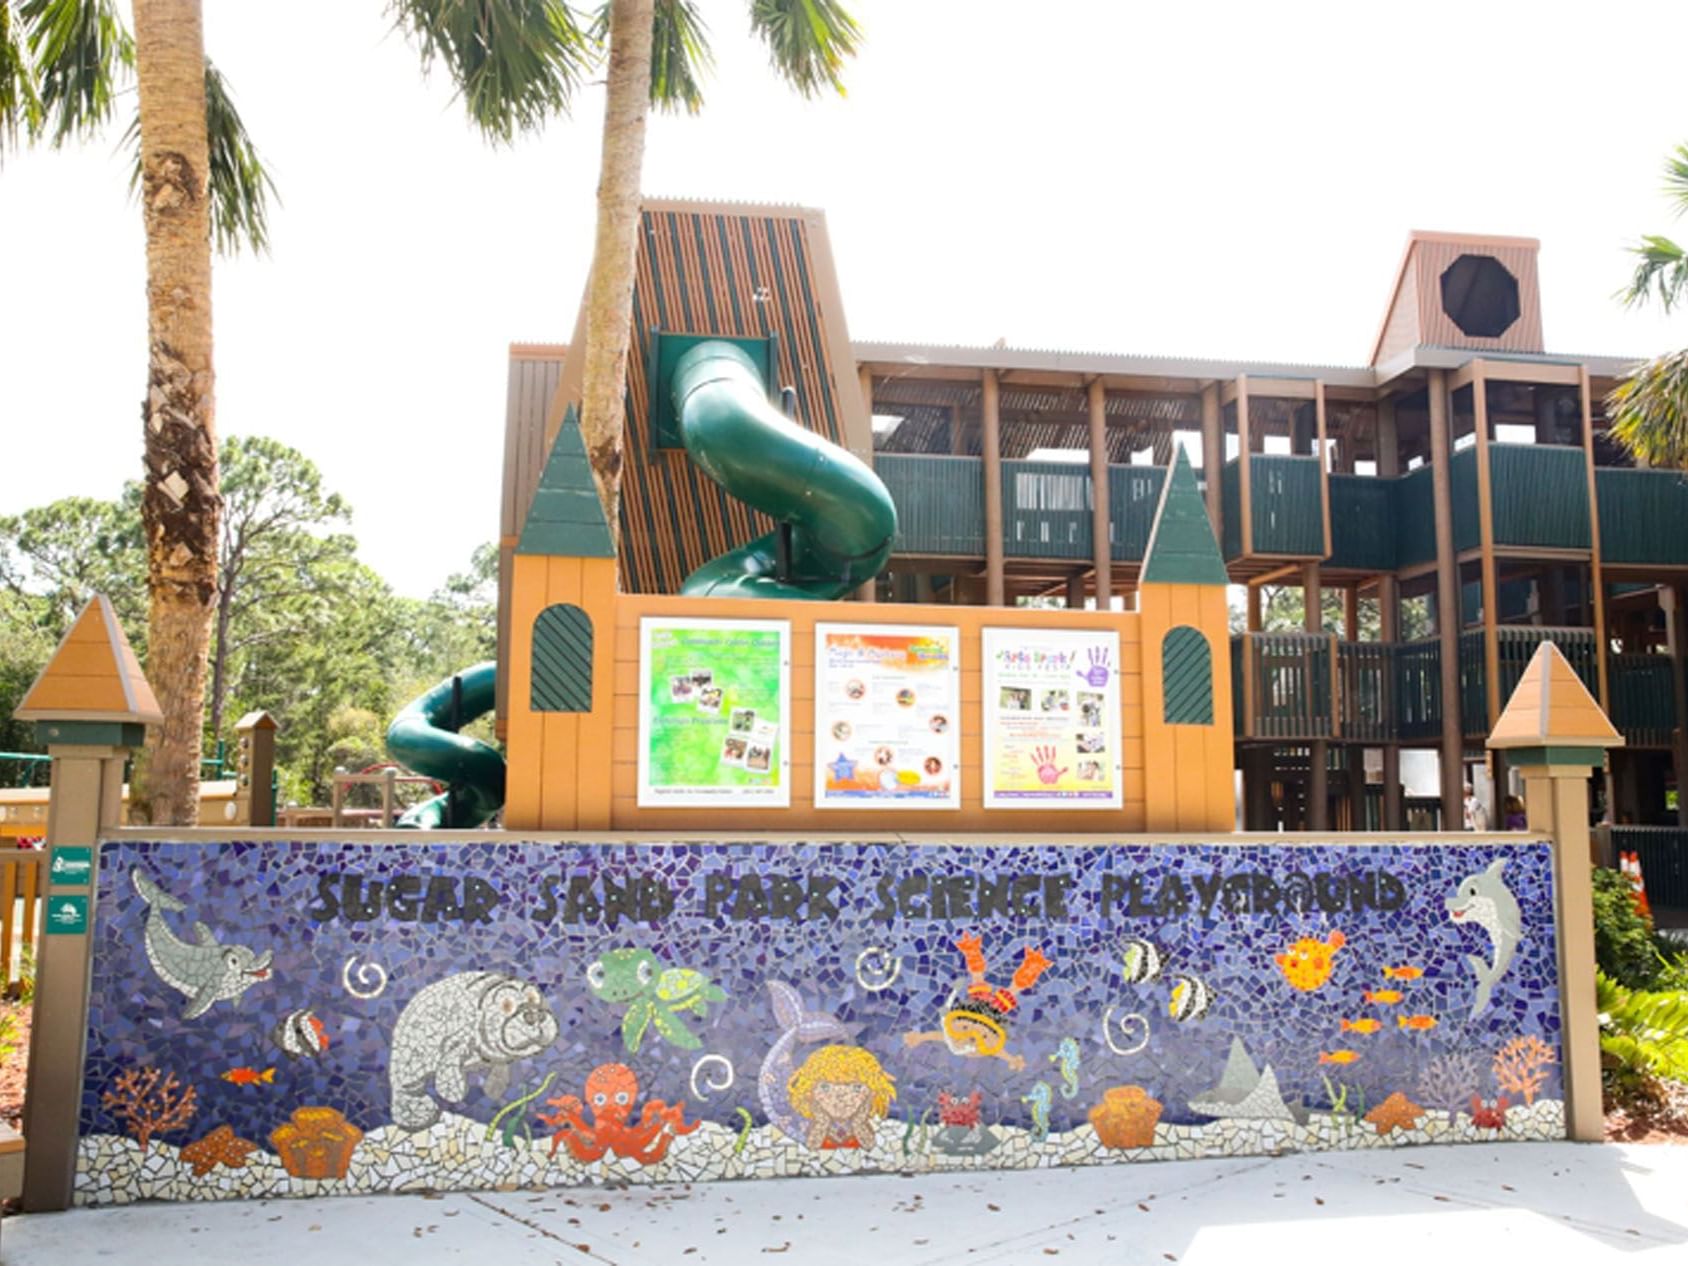 Exterior view of children's play area & a mural art in Sugar Sand Park near Ocean Lodge Boca Raton